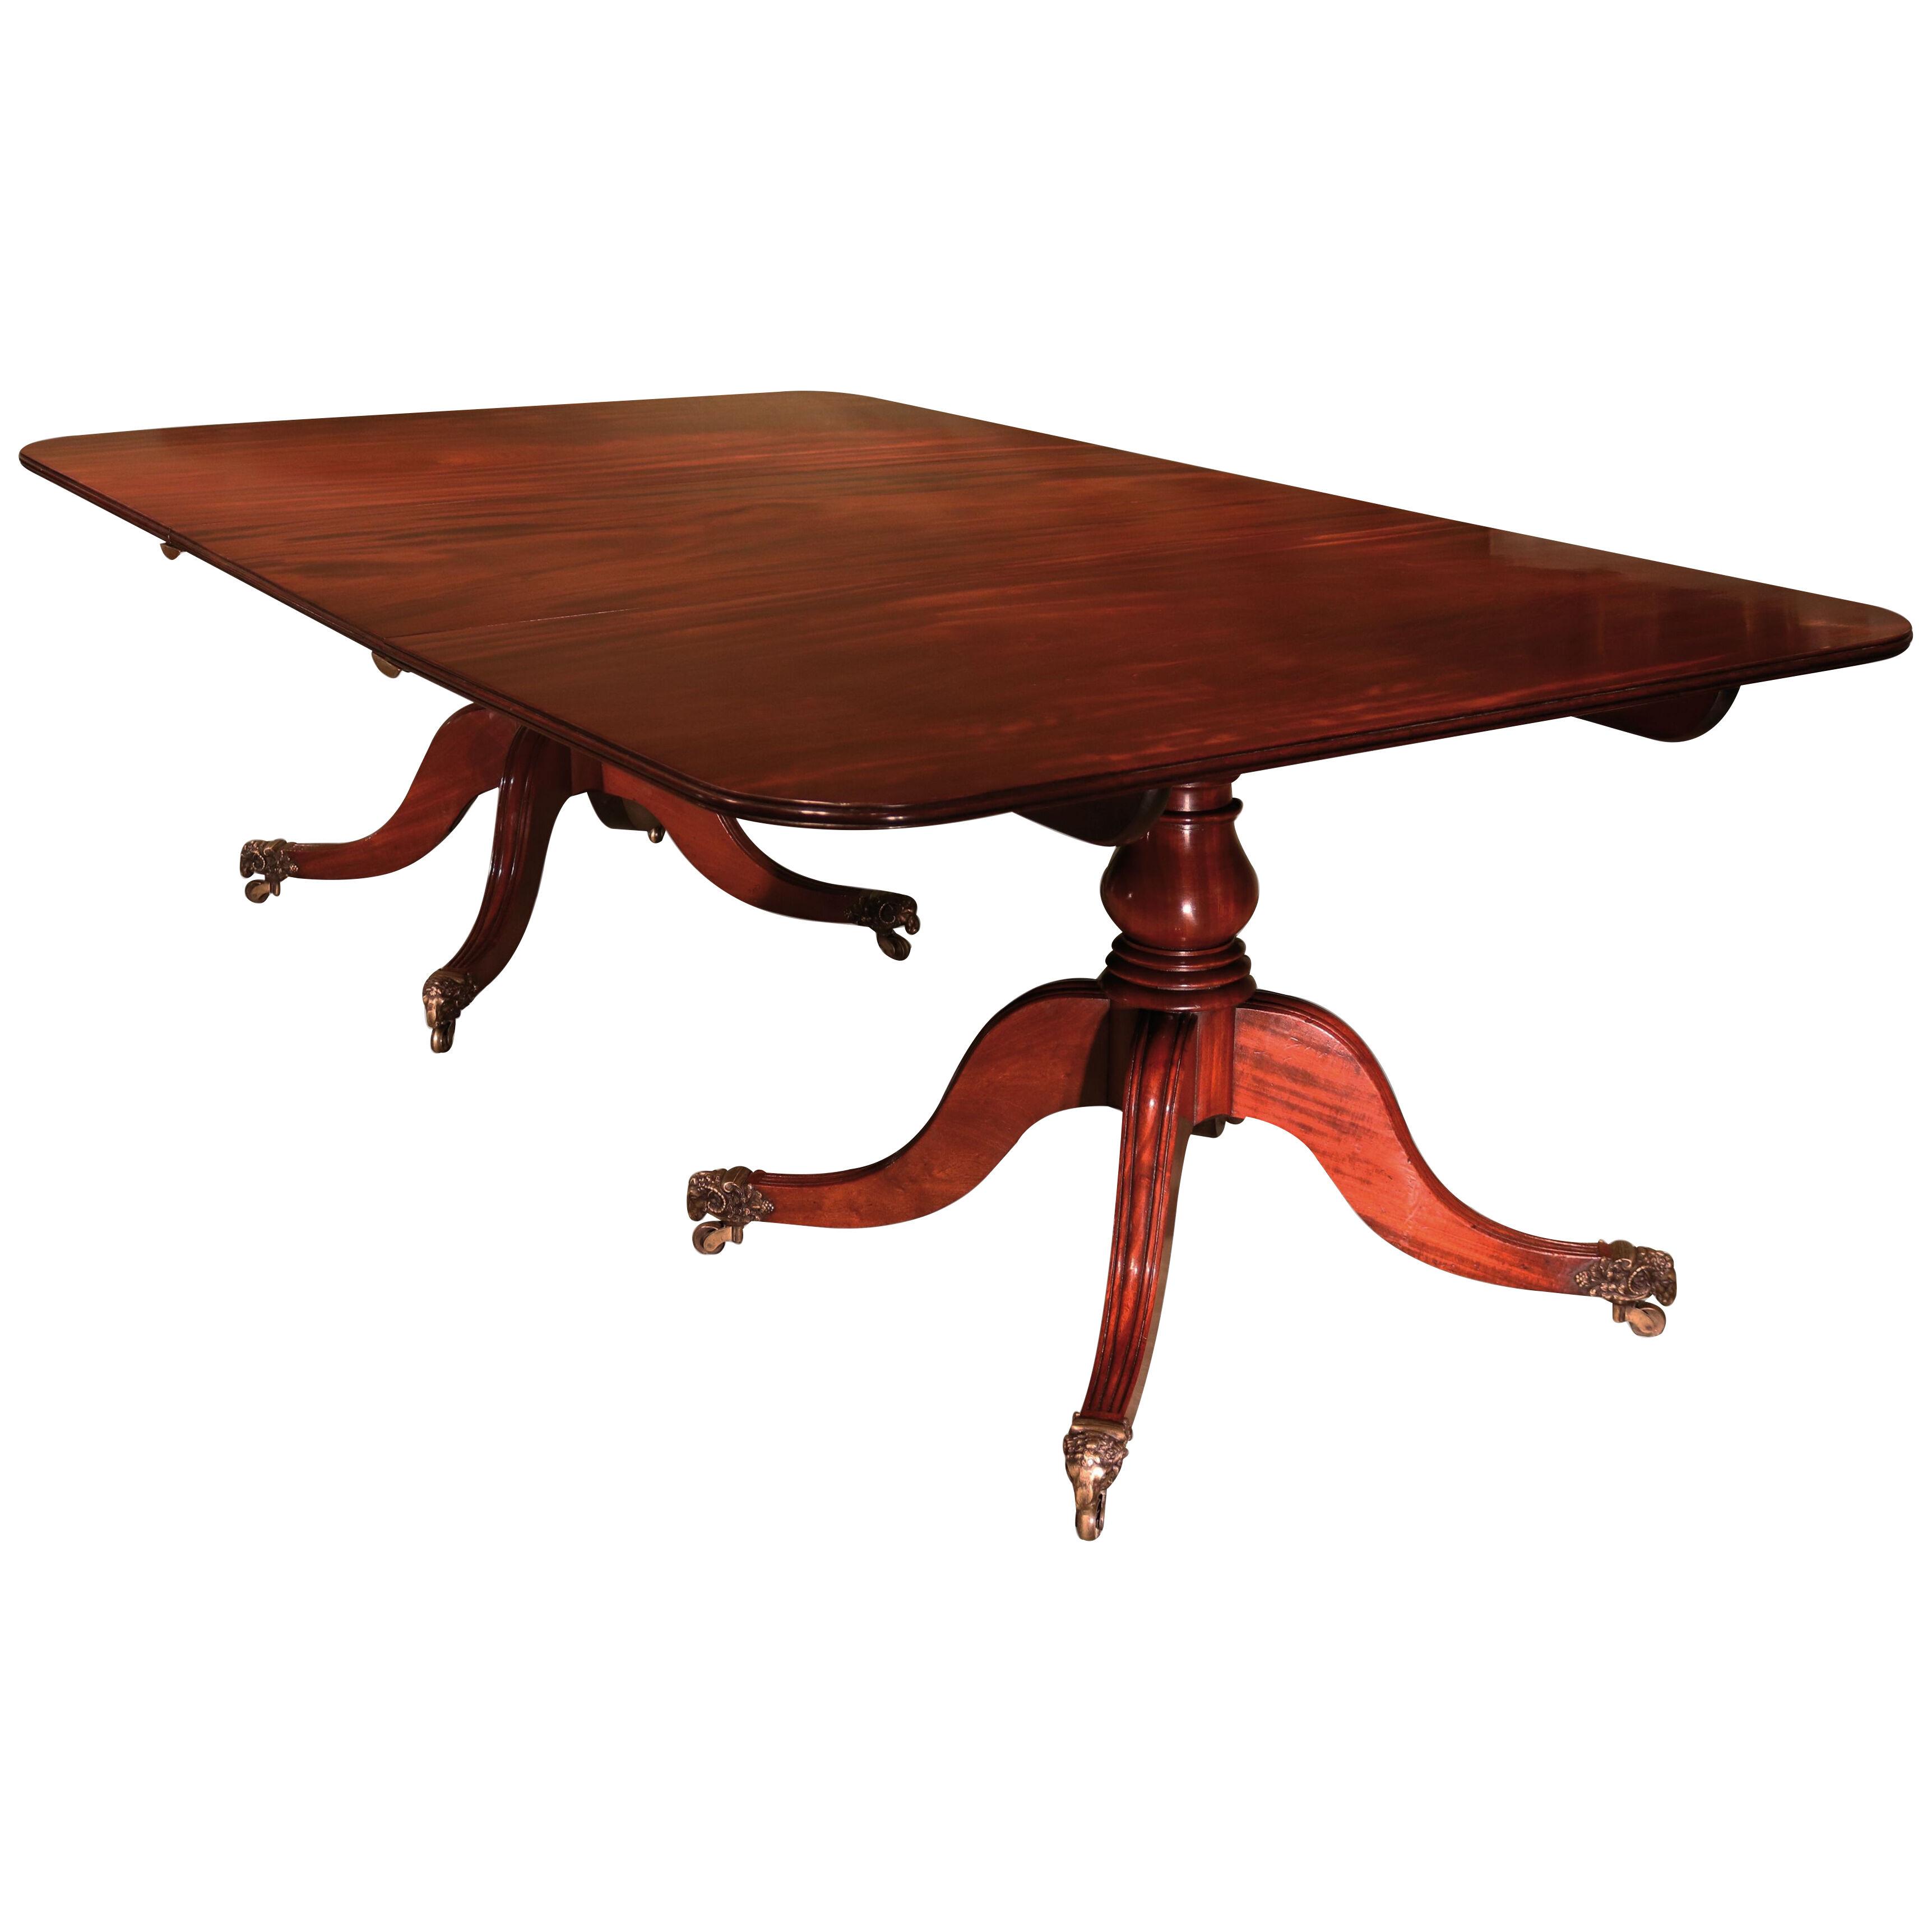 A Regency period mahogany two pillar dining room table